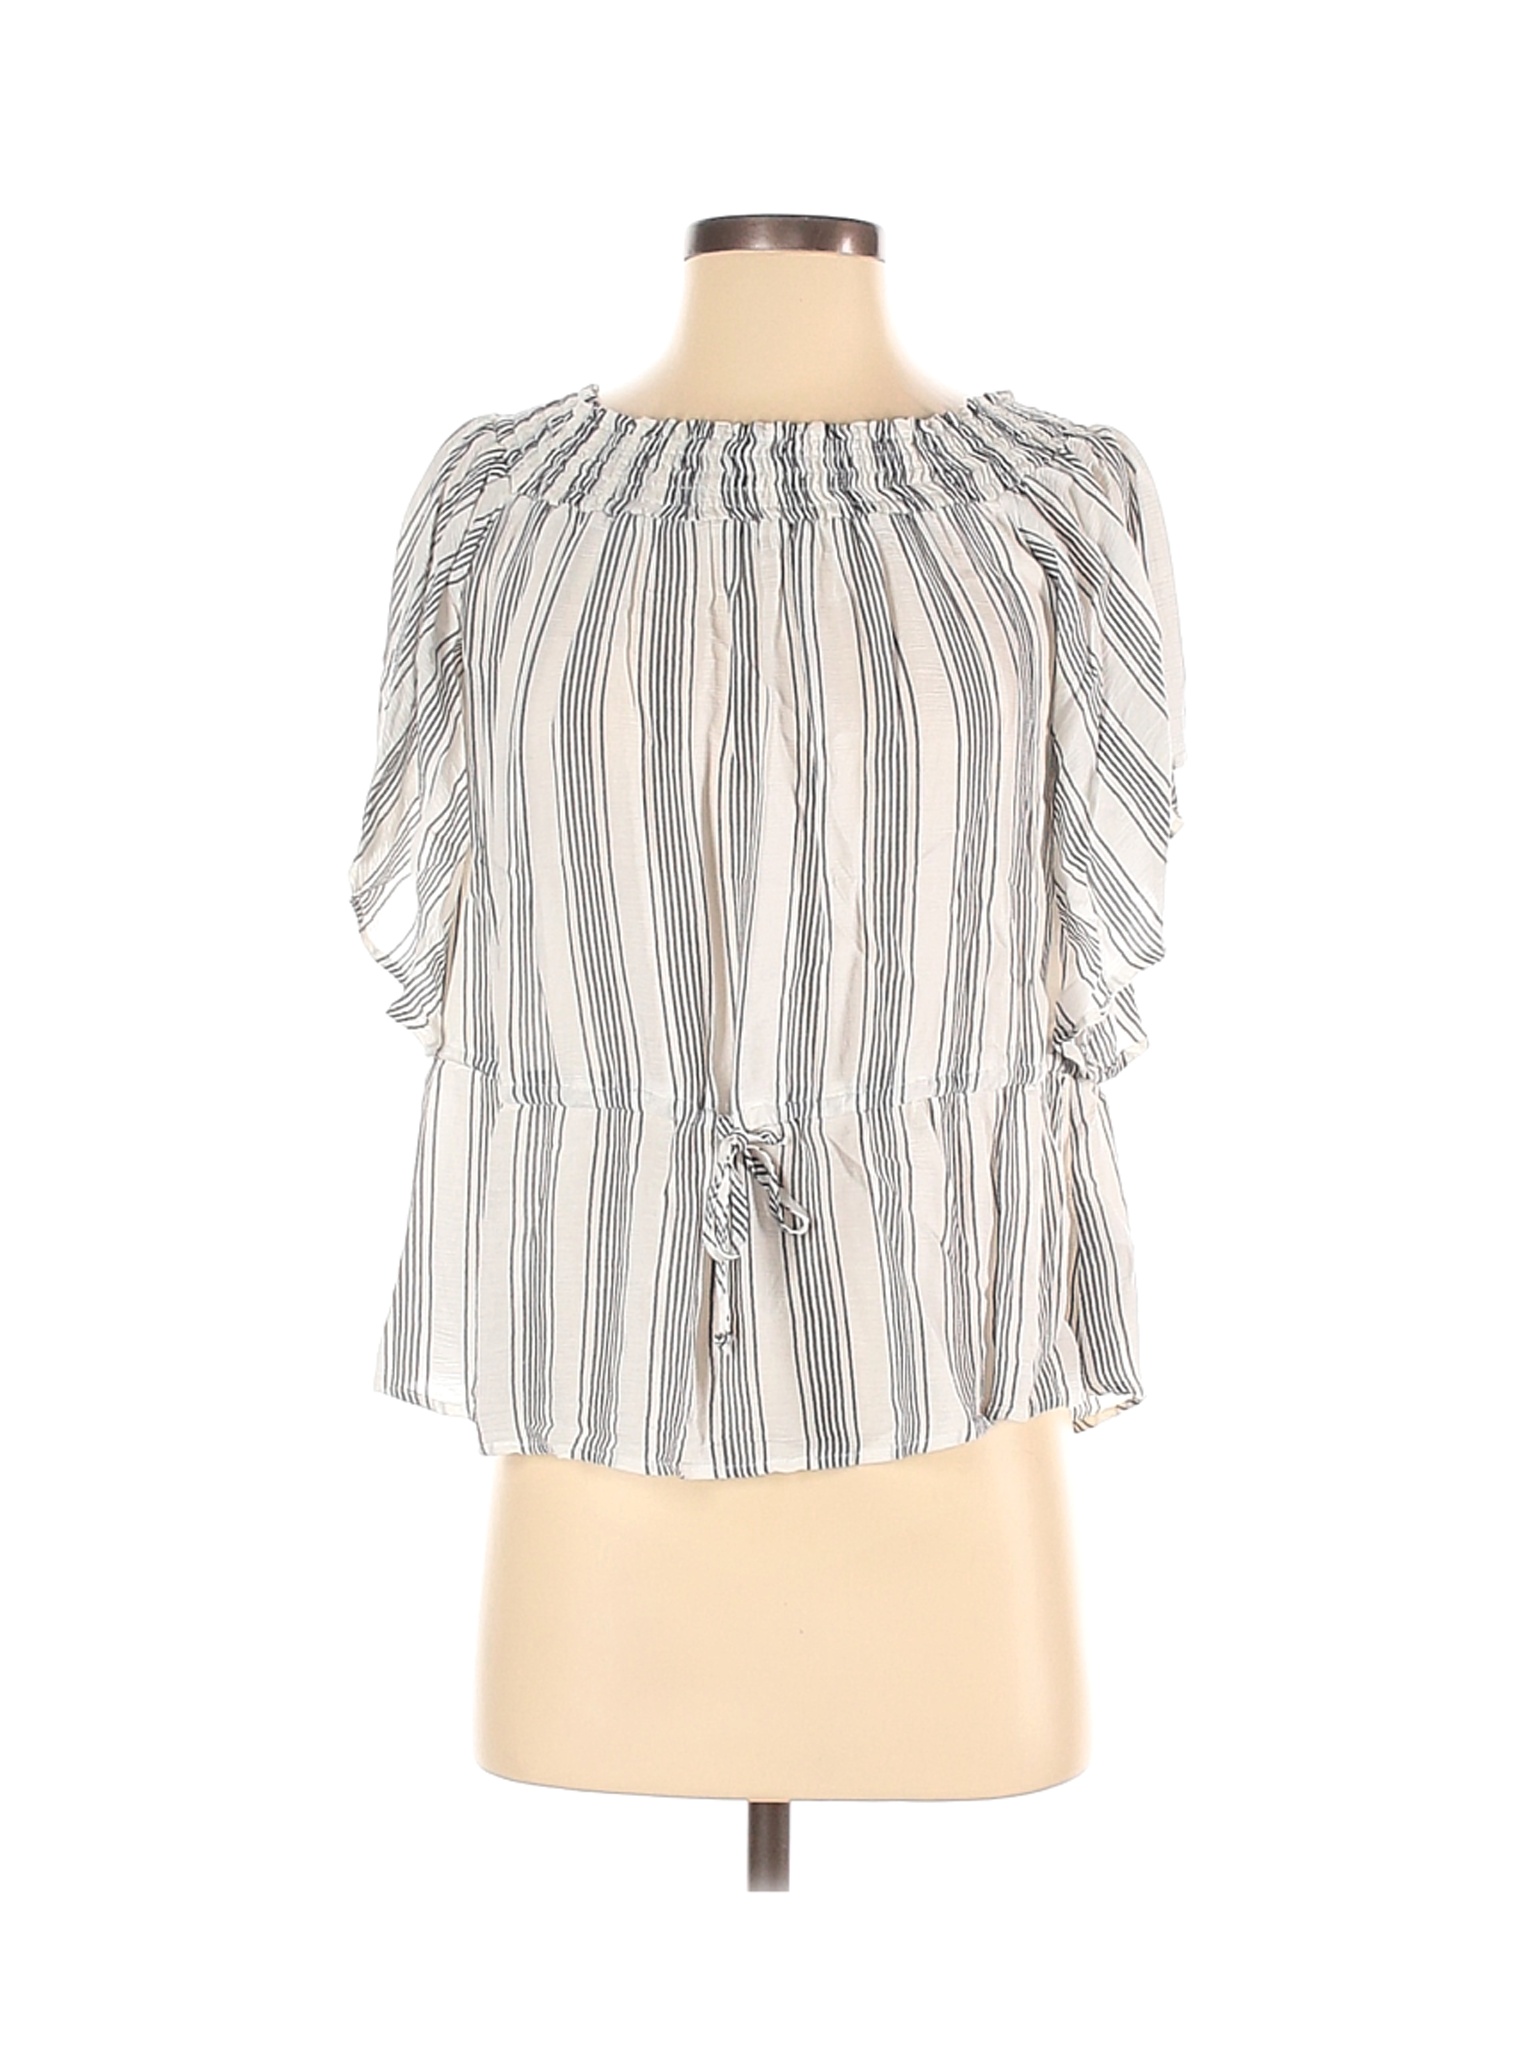 Abercrombie & Fitch Women White Short Sleeve Blouse S | eBay